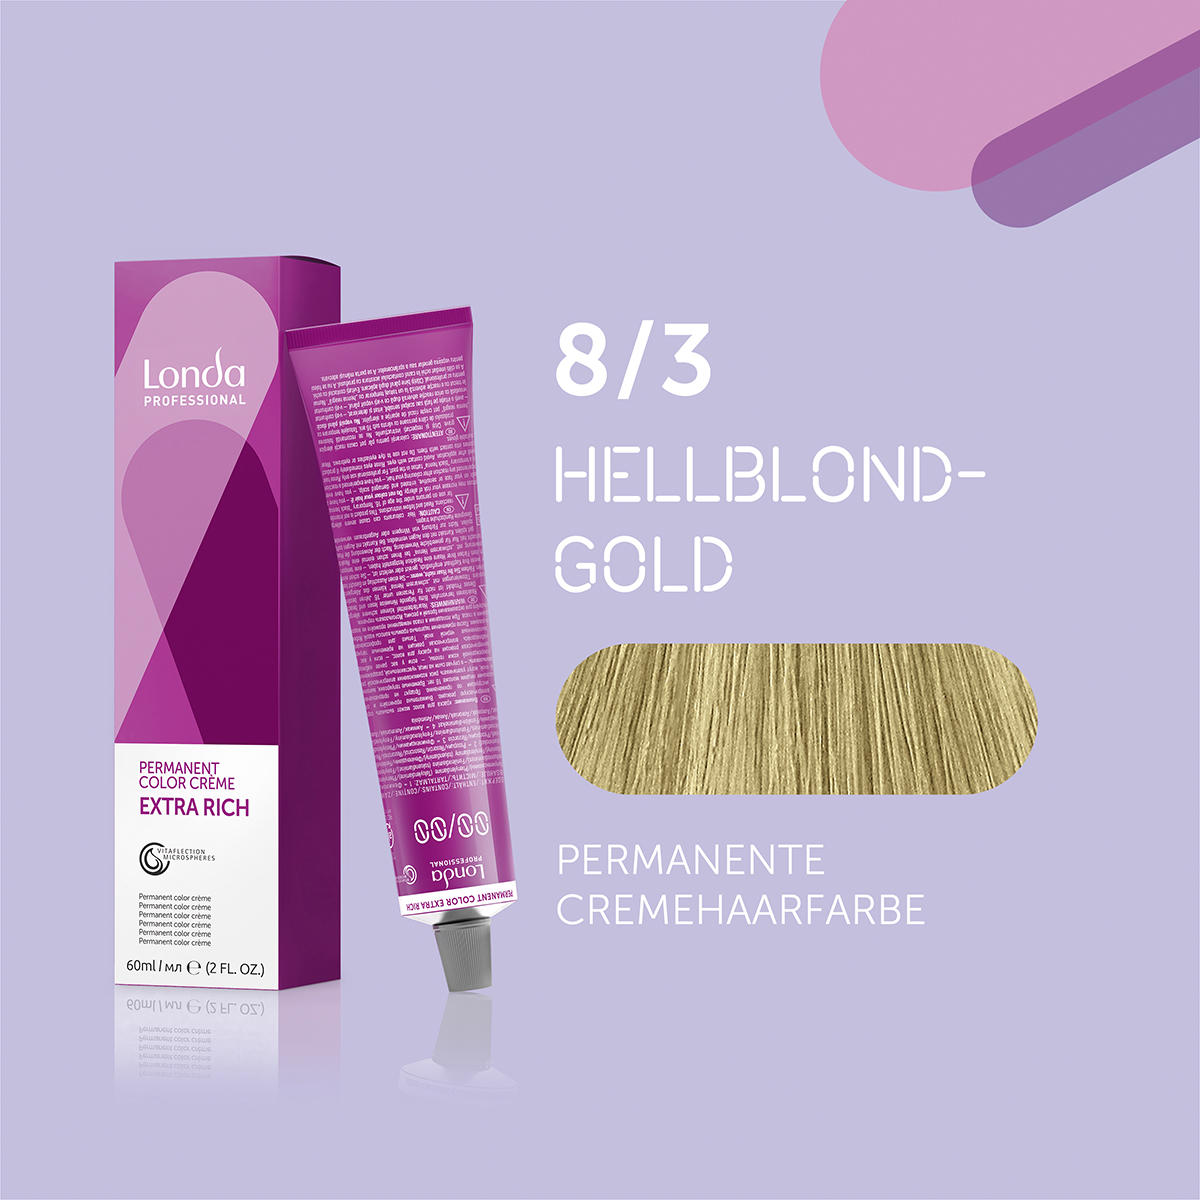 Londa Permanente Cremehaarfarbe Extra Rich 8/3 Hellblond Gold, Tube 60 ml - 1